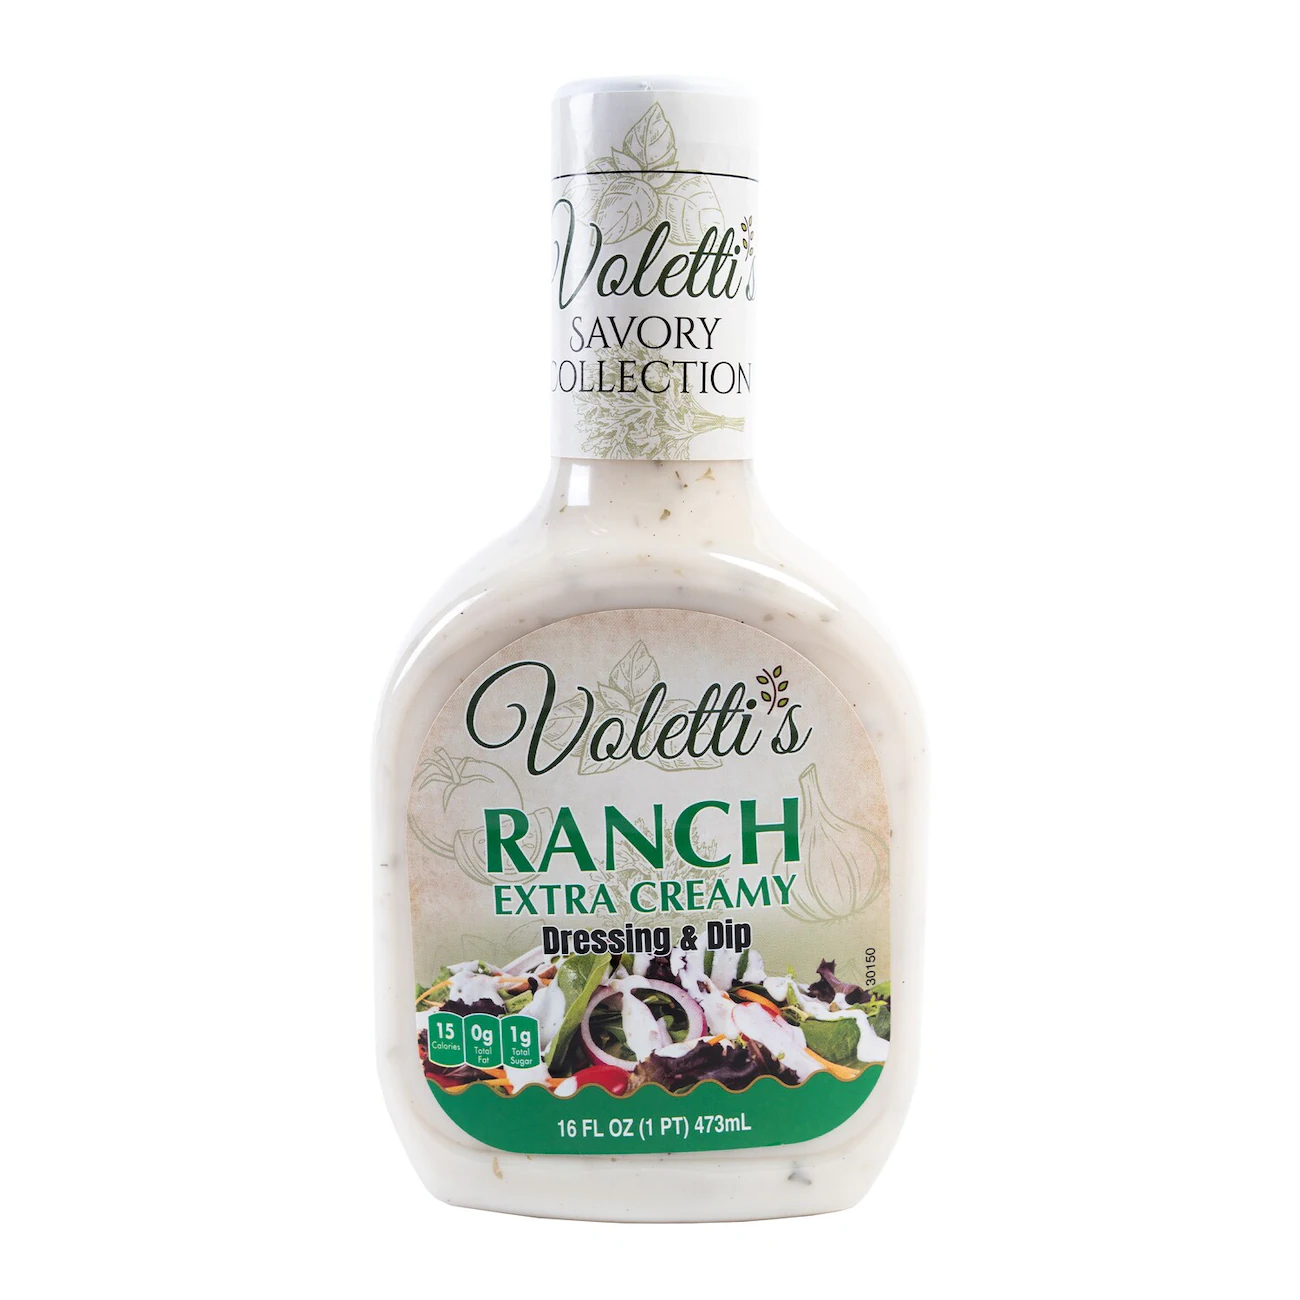 
Voletti's Extra Creamy Ranch Dressing, 16 oz.